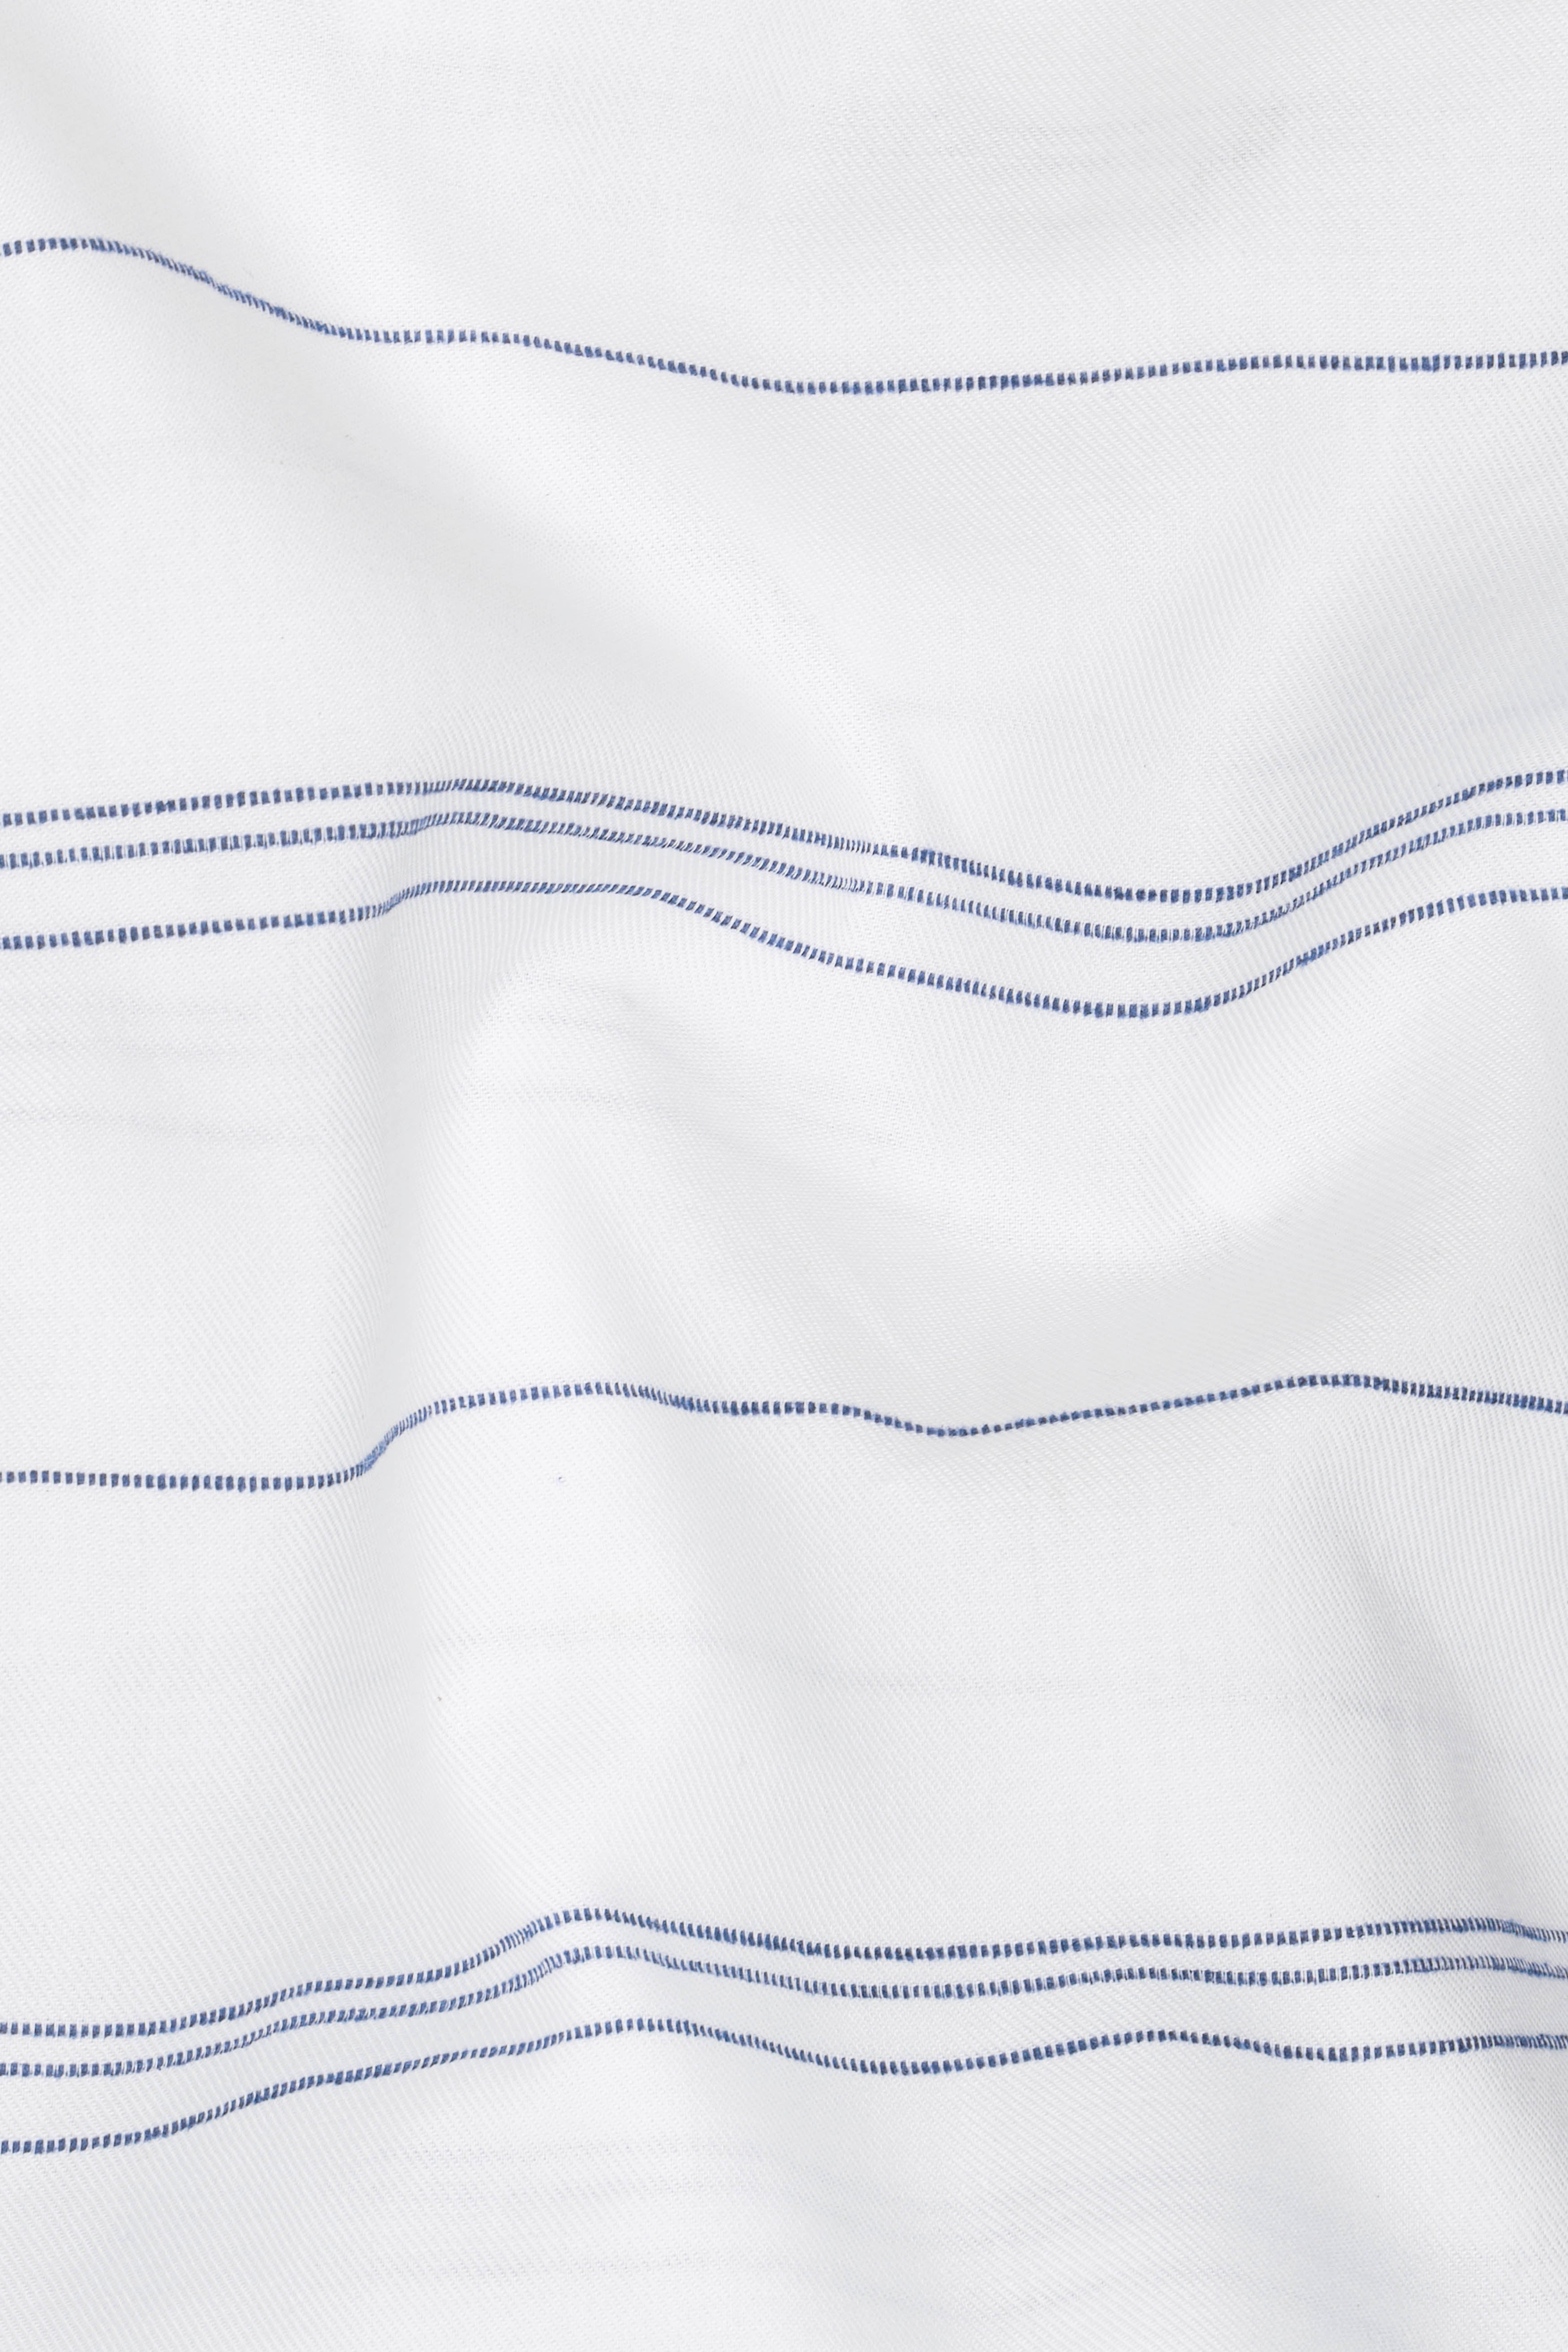 Bright White with Rhino Blue Striped Dobby Textured Premium Giza Cotton Shirt